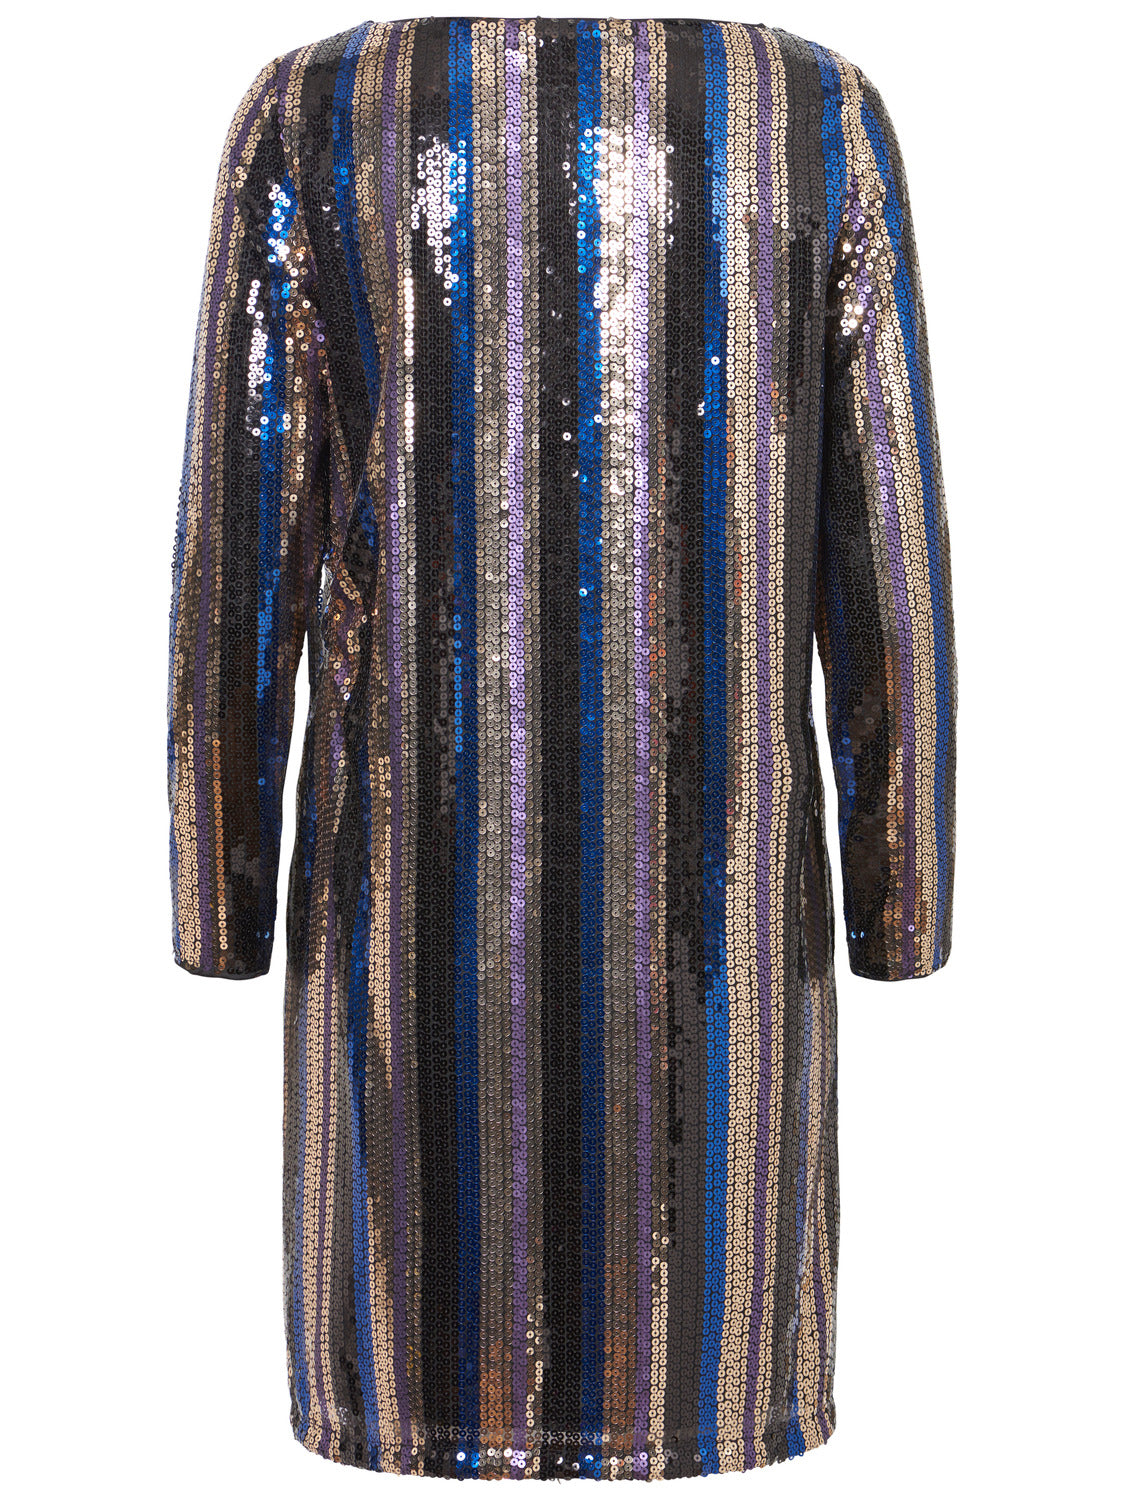 Doris Sequin Dress - Stripe Multi